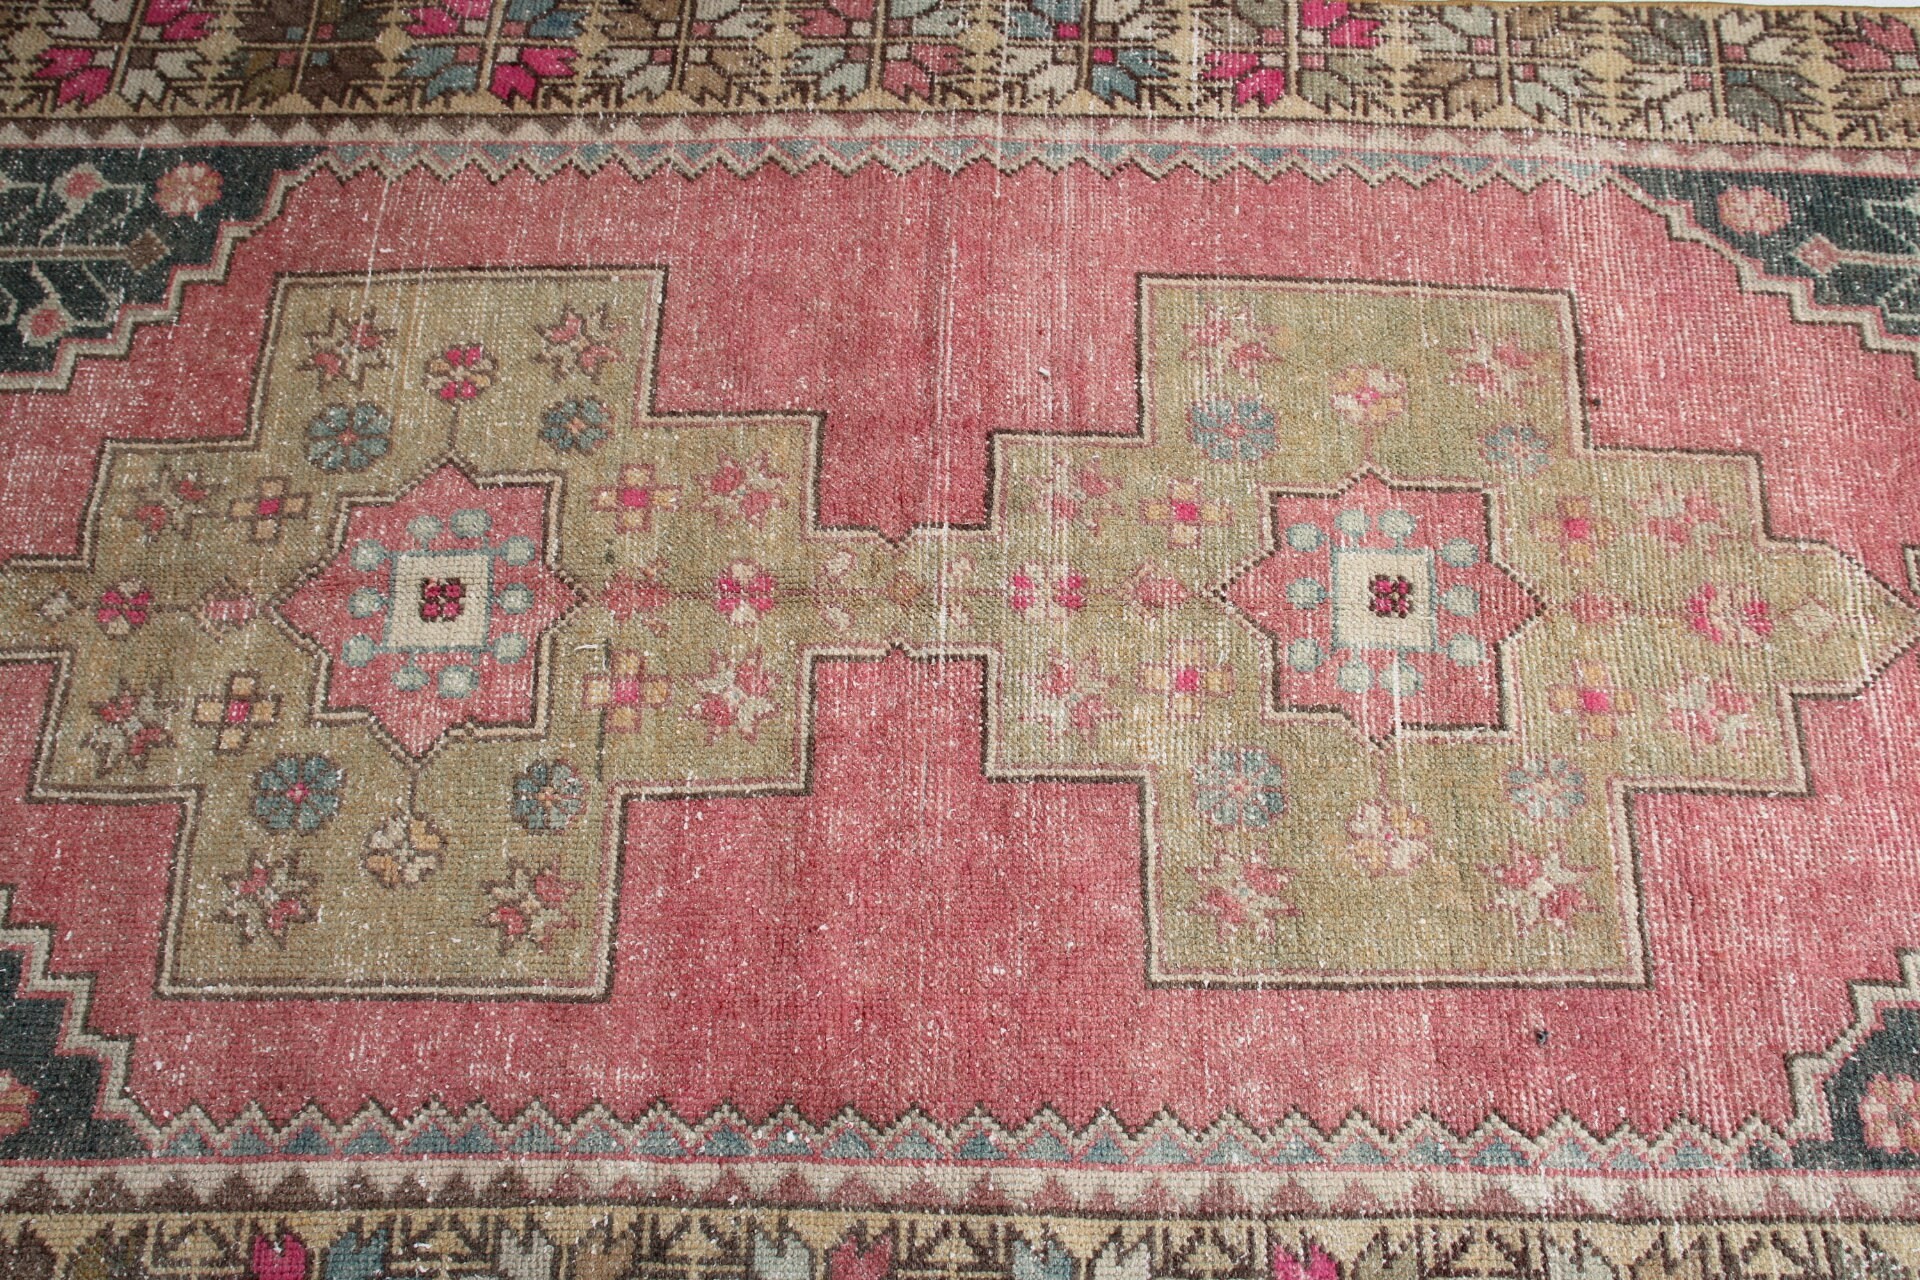 Oriental Rug, Boho Rugs, Kitchen Rug, Turkish Rugs, 3.8x7.5 ft Area Rugs, Living Room Rugs, Pink Home Decor Rugs, Vintage Rug